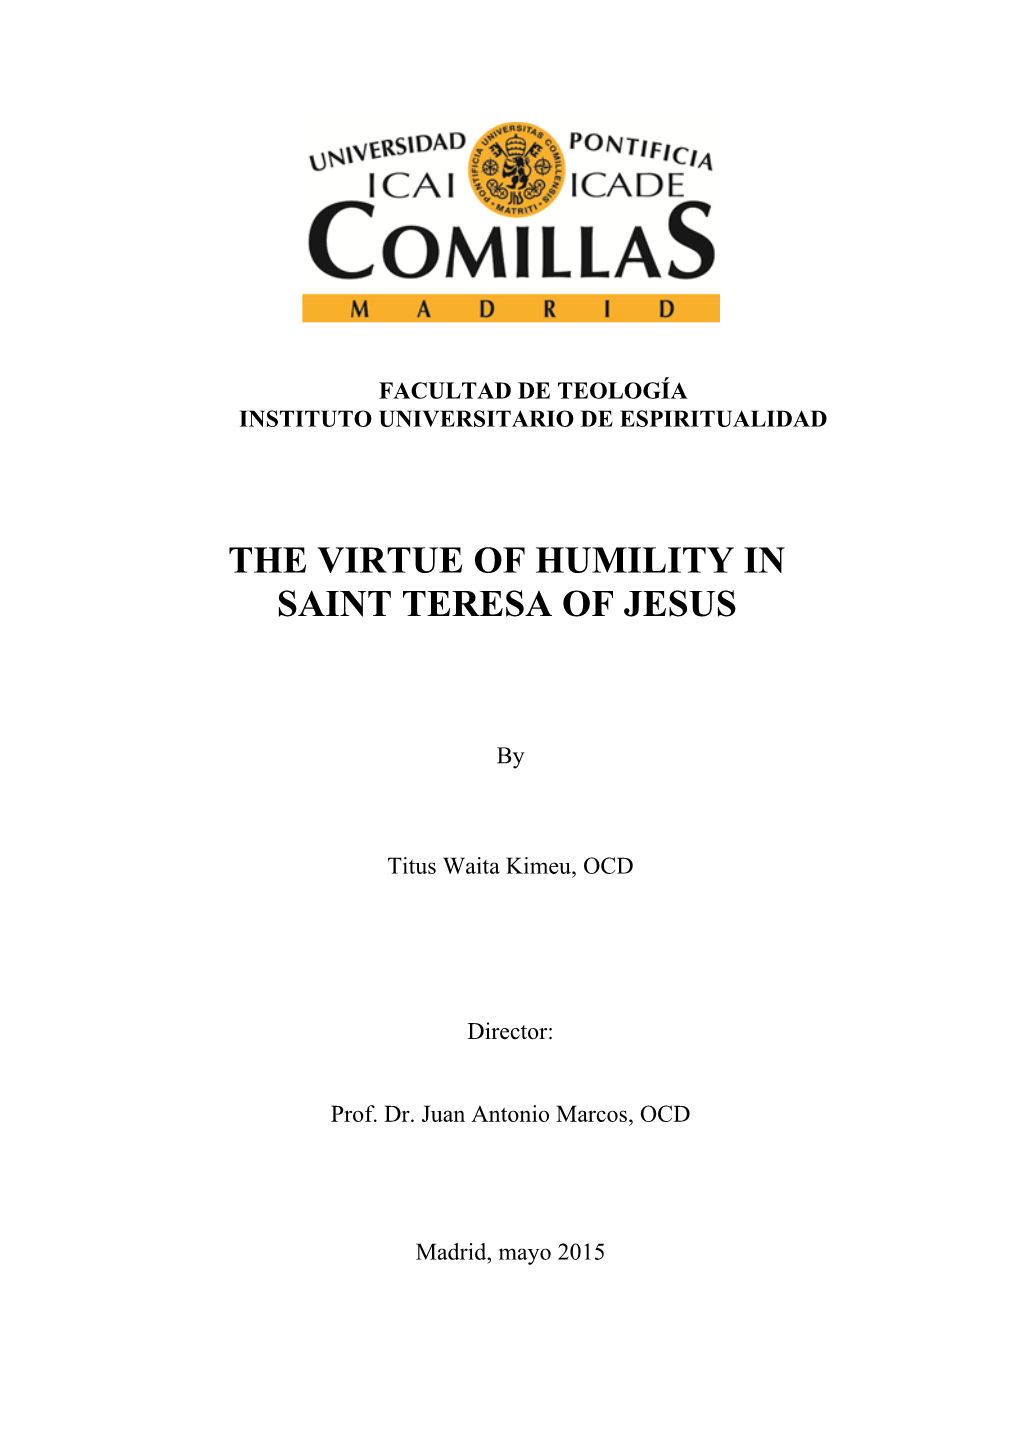 The Virtue of Humility in Saint Teresa of Jesus